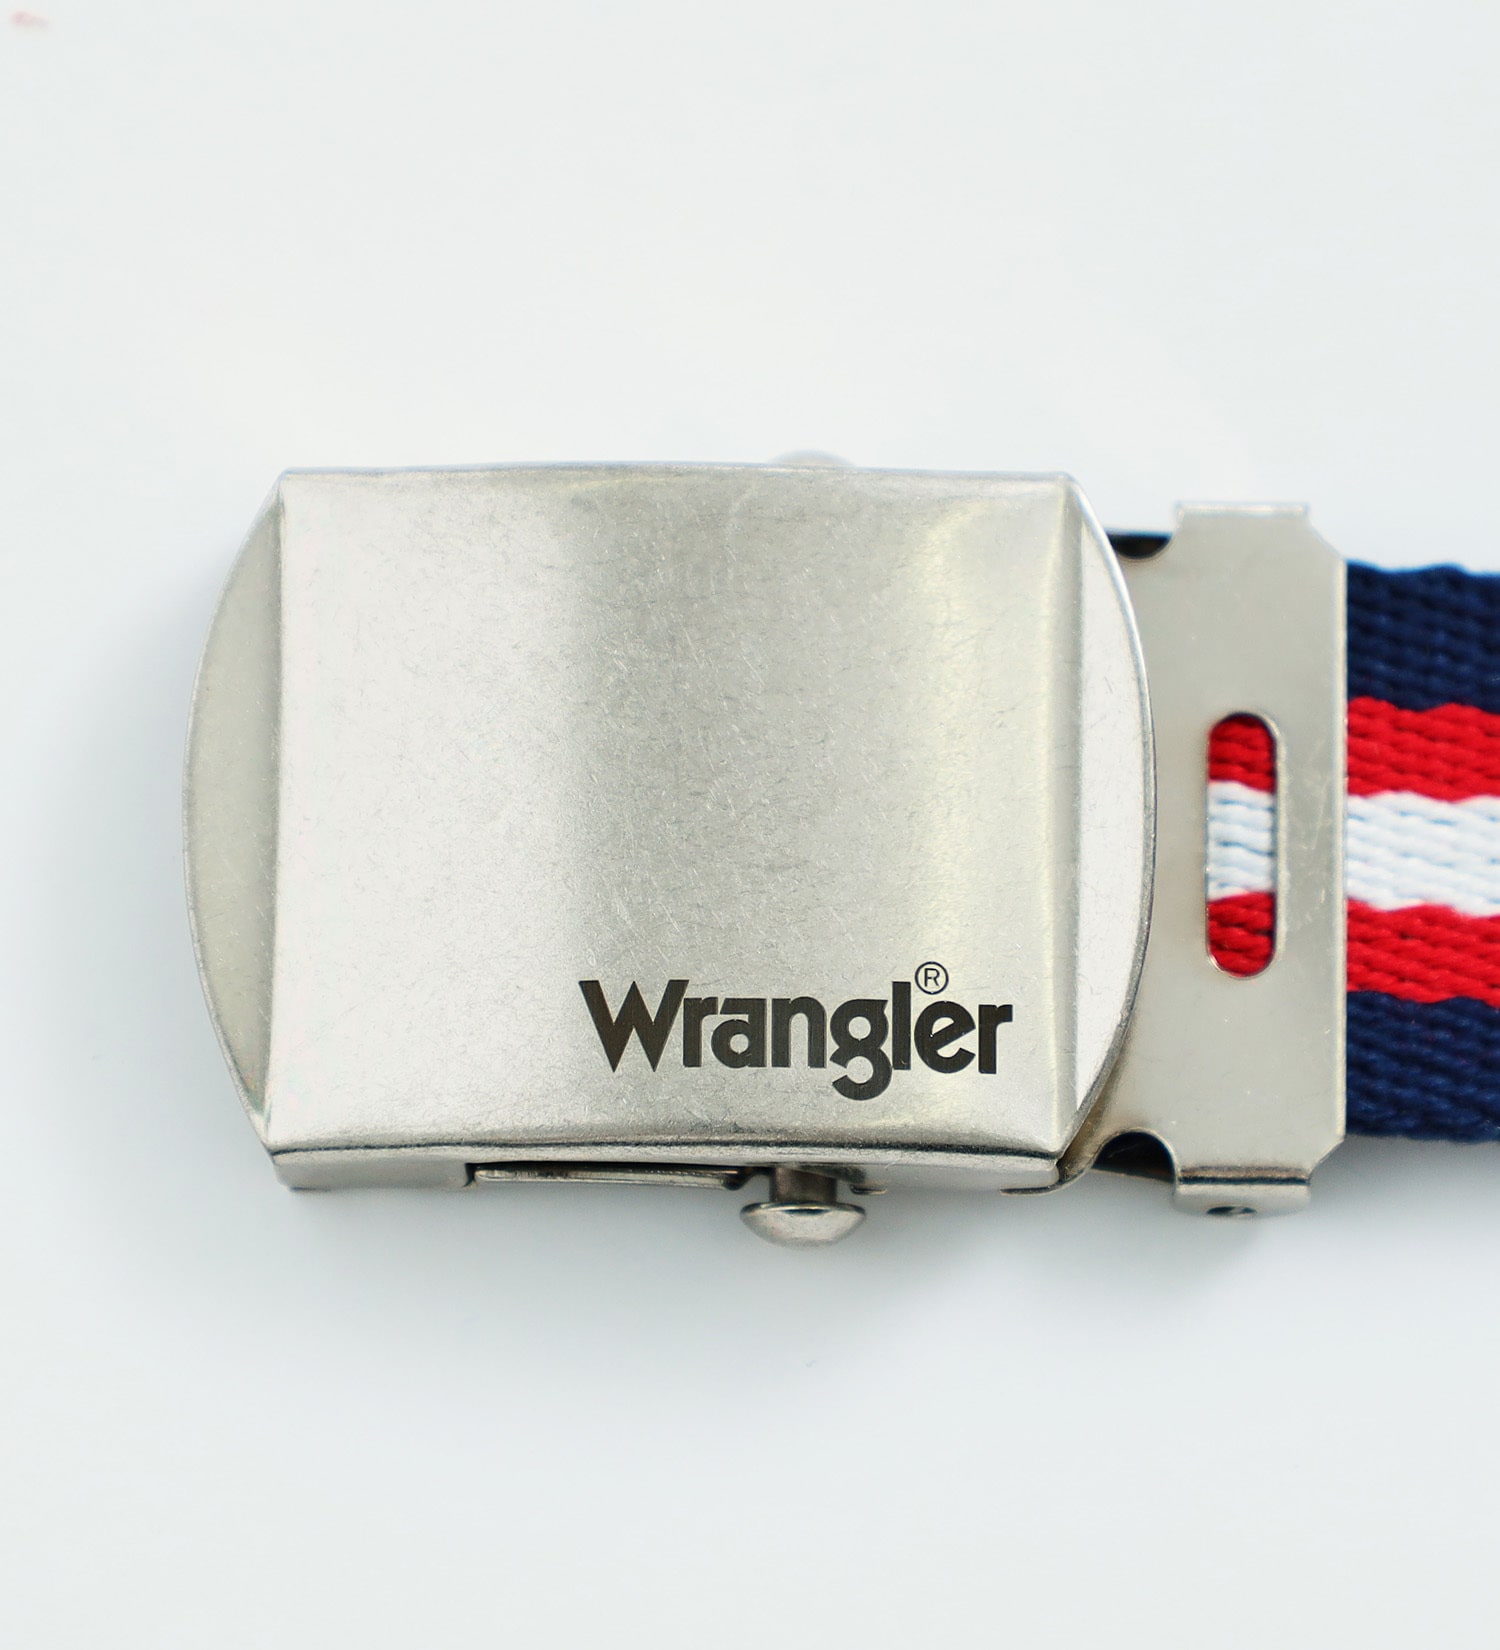 Wrangler(ラングラー)のWrangler GIラインベルト|ファッション雑貨/ベルト/メンズ|ネイビー